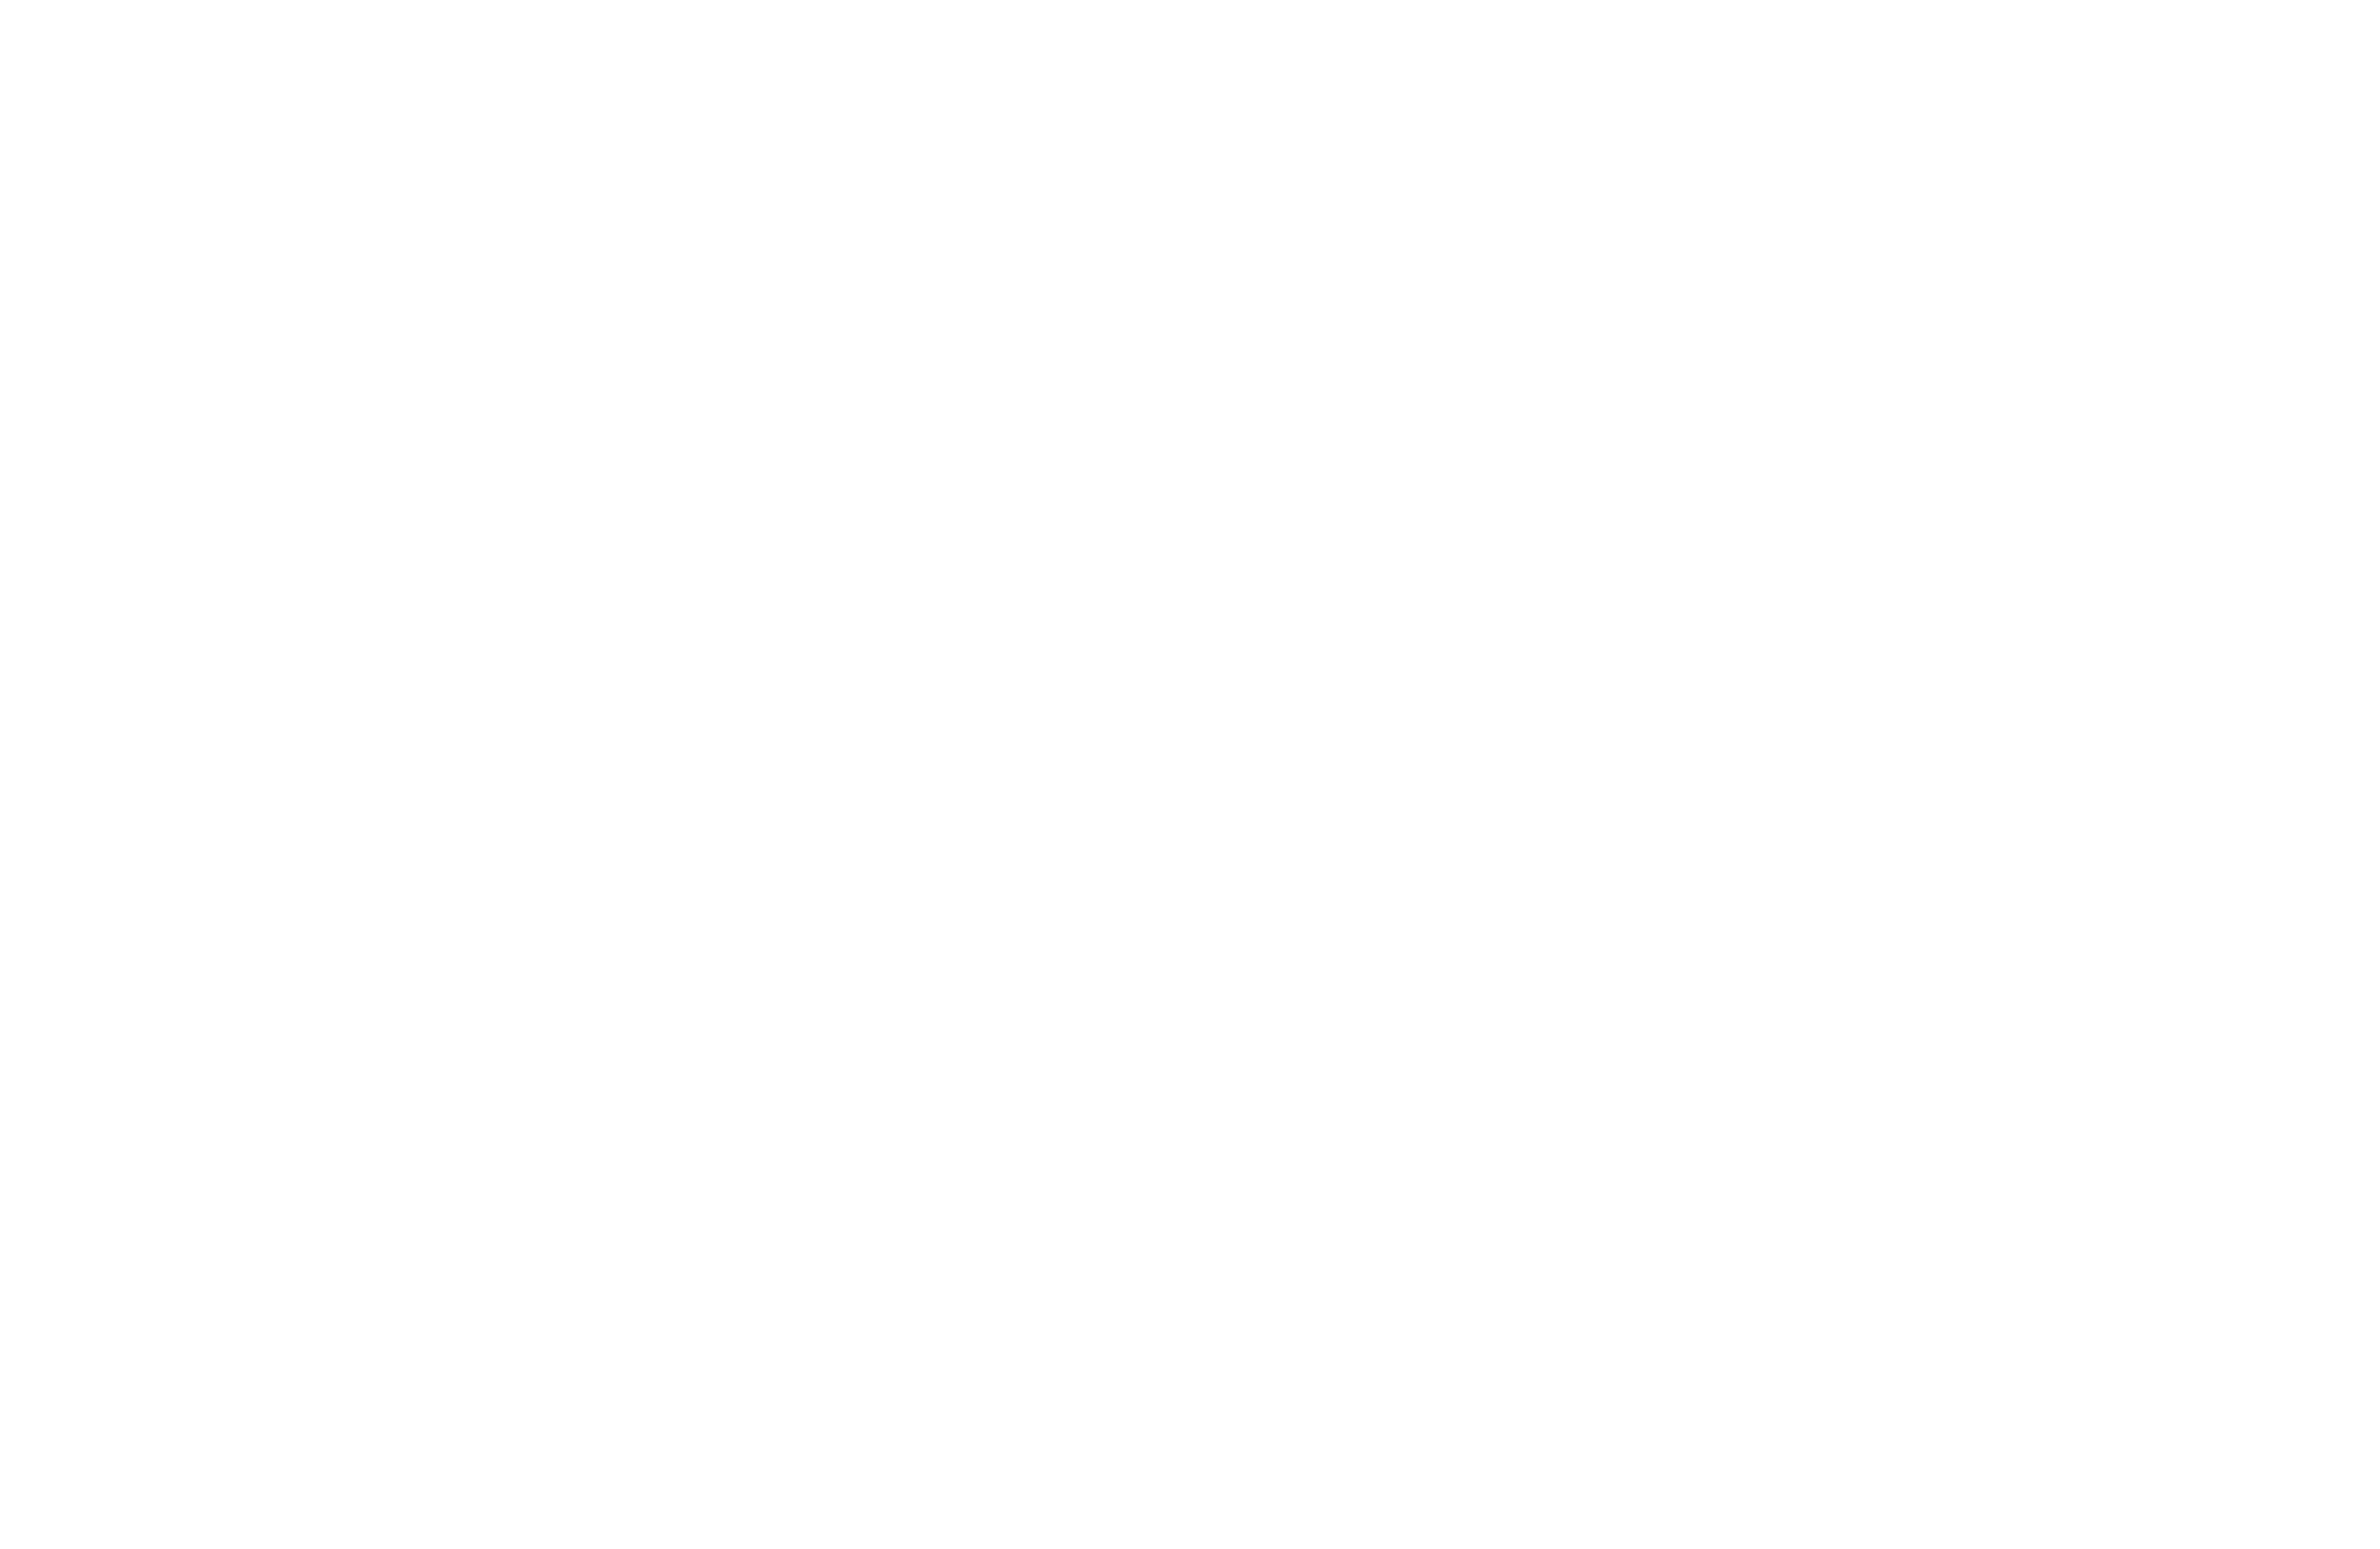 3 Bears Media